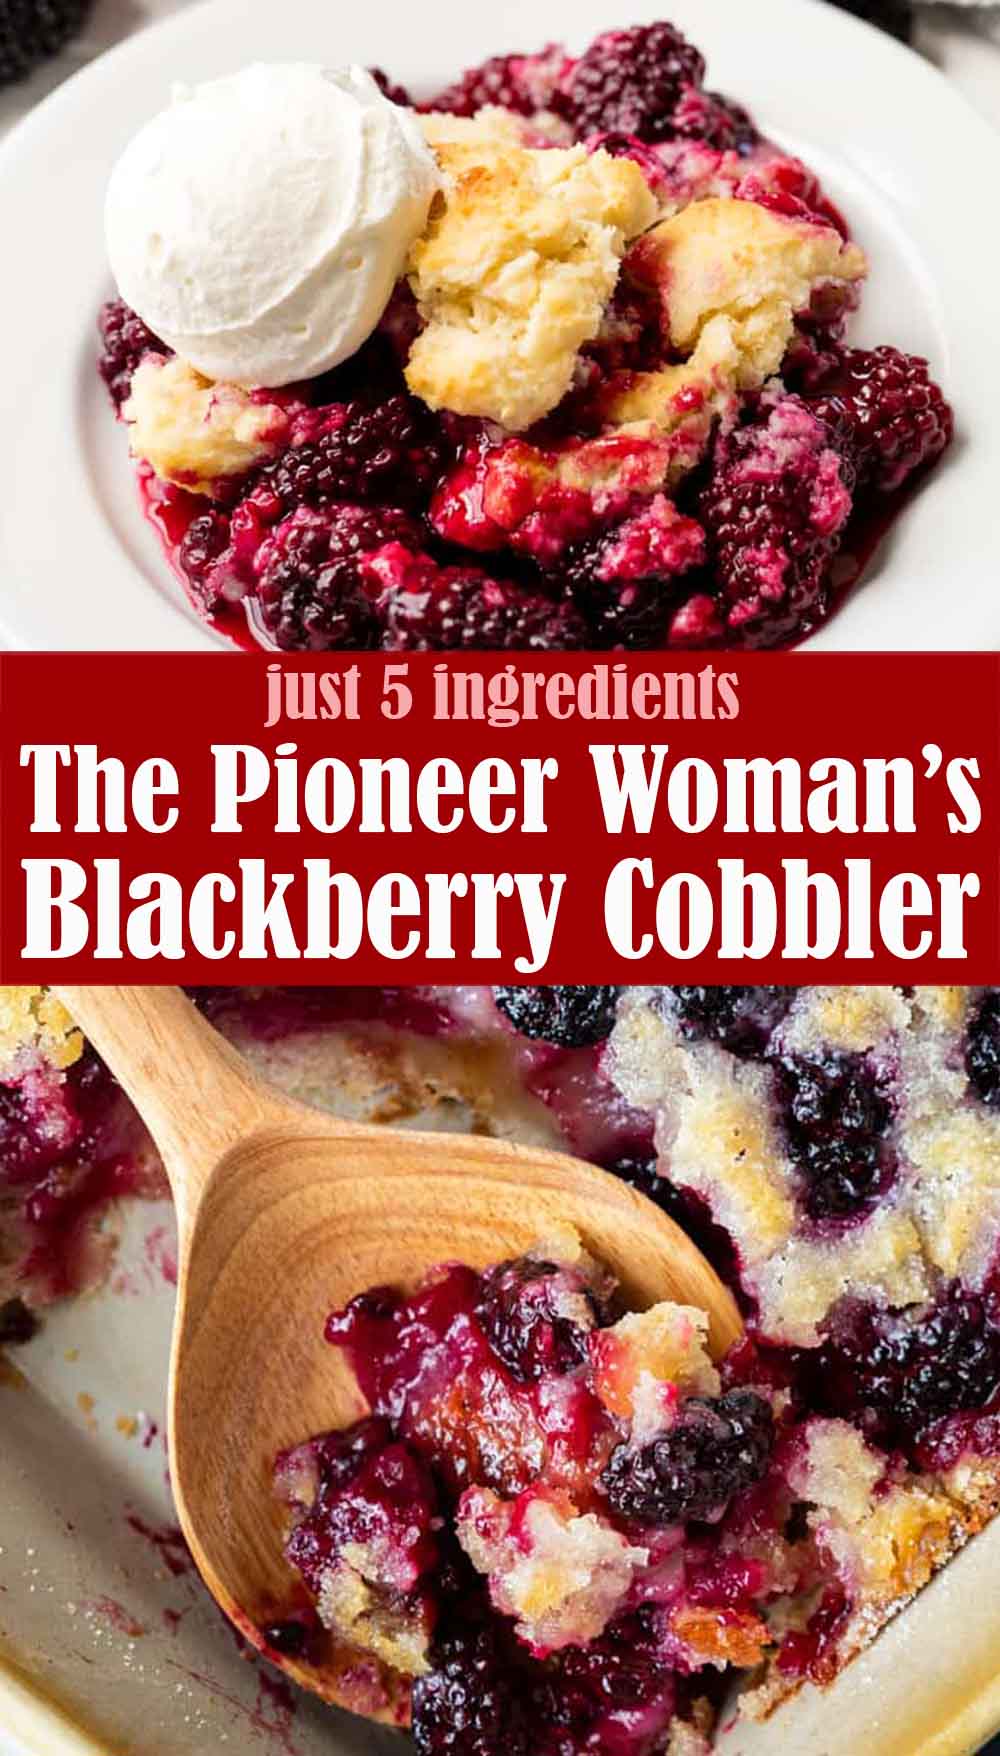 The Pioneer Woman’s Blackberry Cobbler